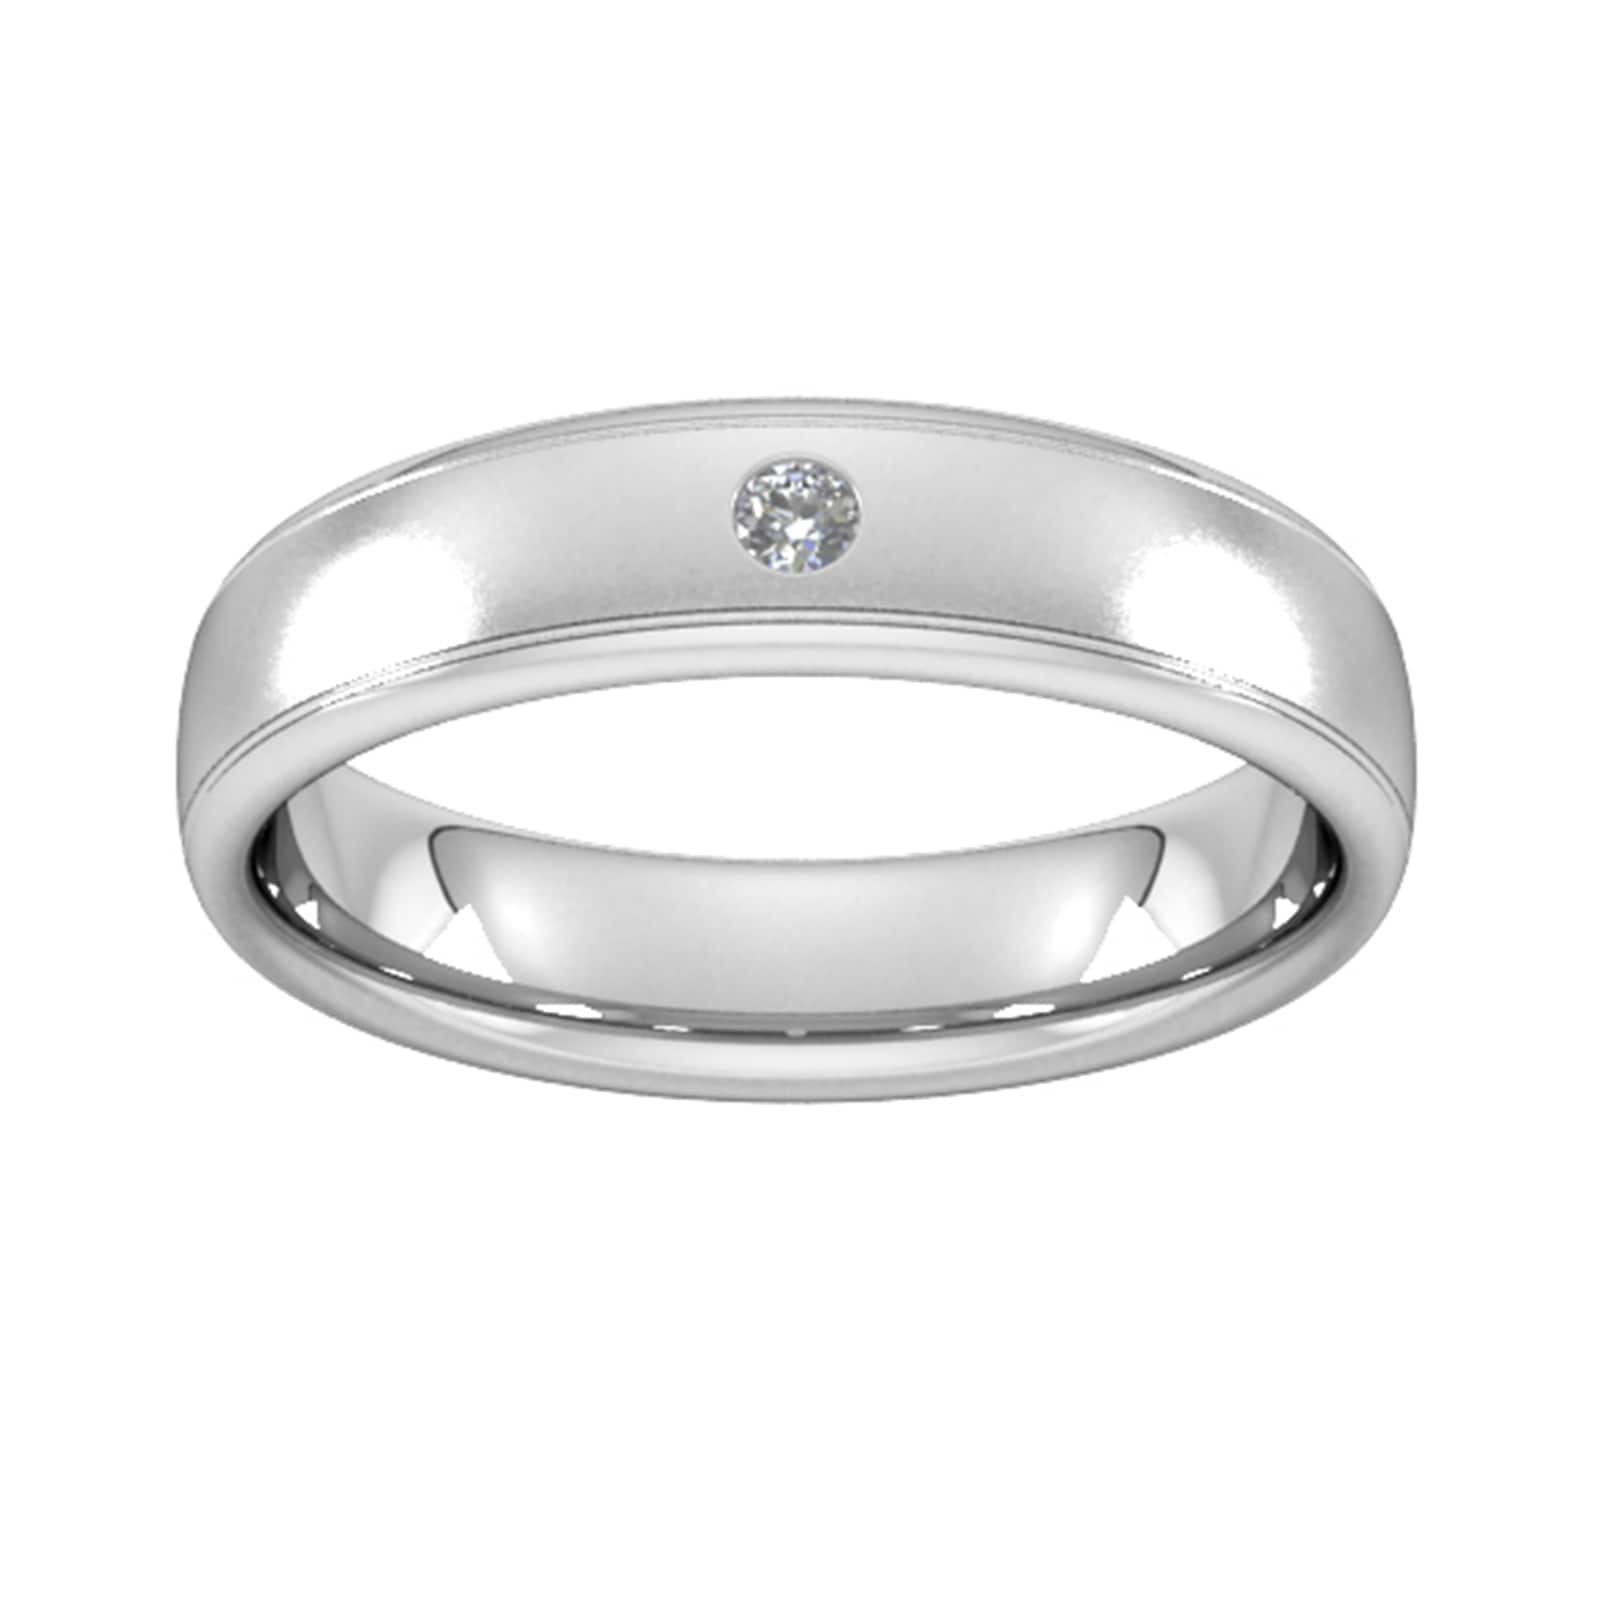 5mm Brilliant Cut Diamond Set Wedding Ring In Platinum - Ring Size R